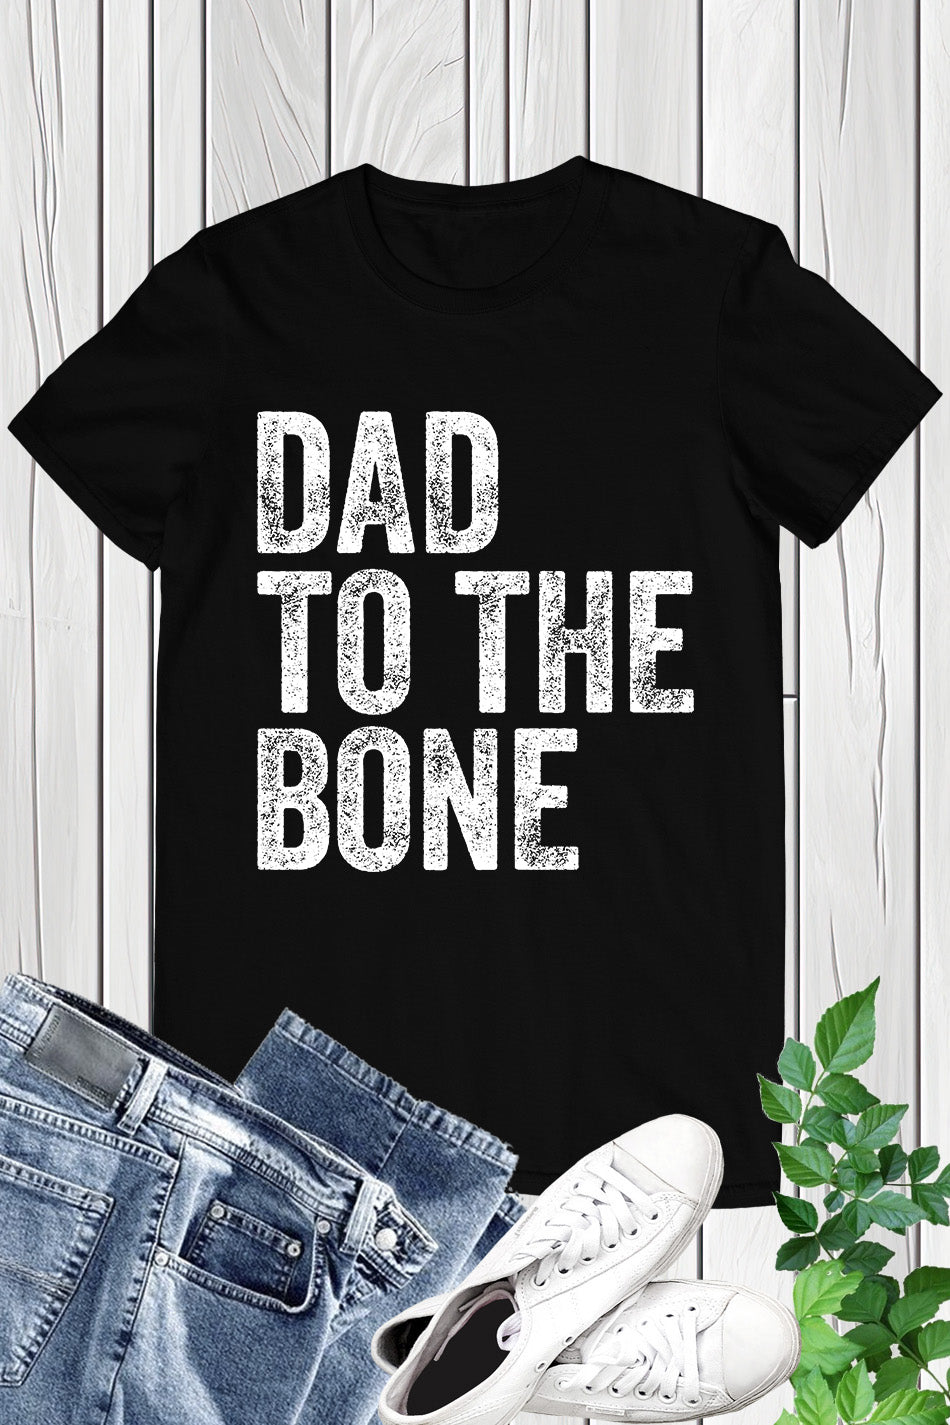 Dad To The Bone T-Shirt